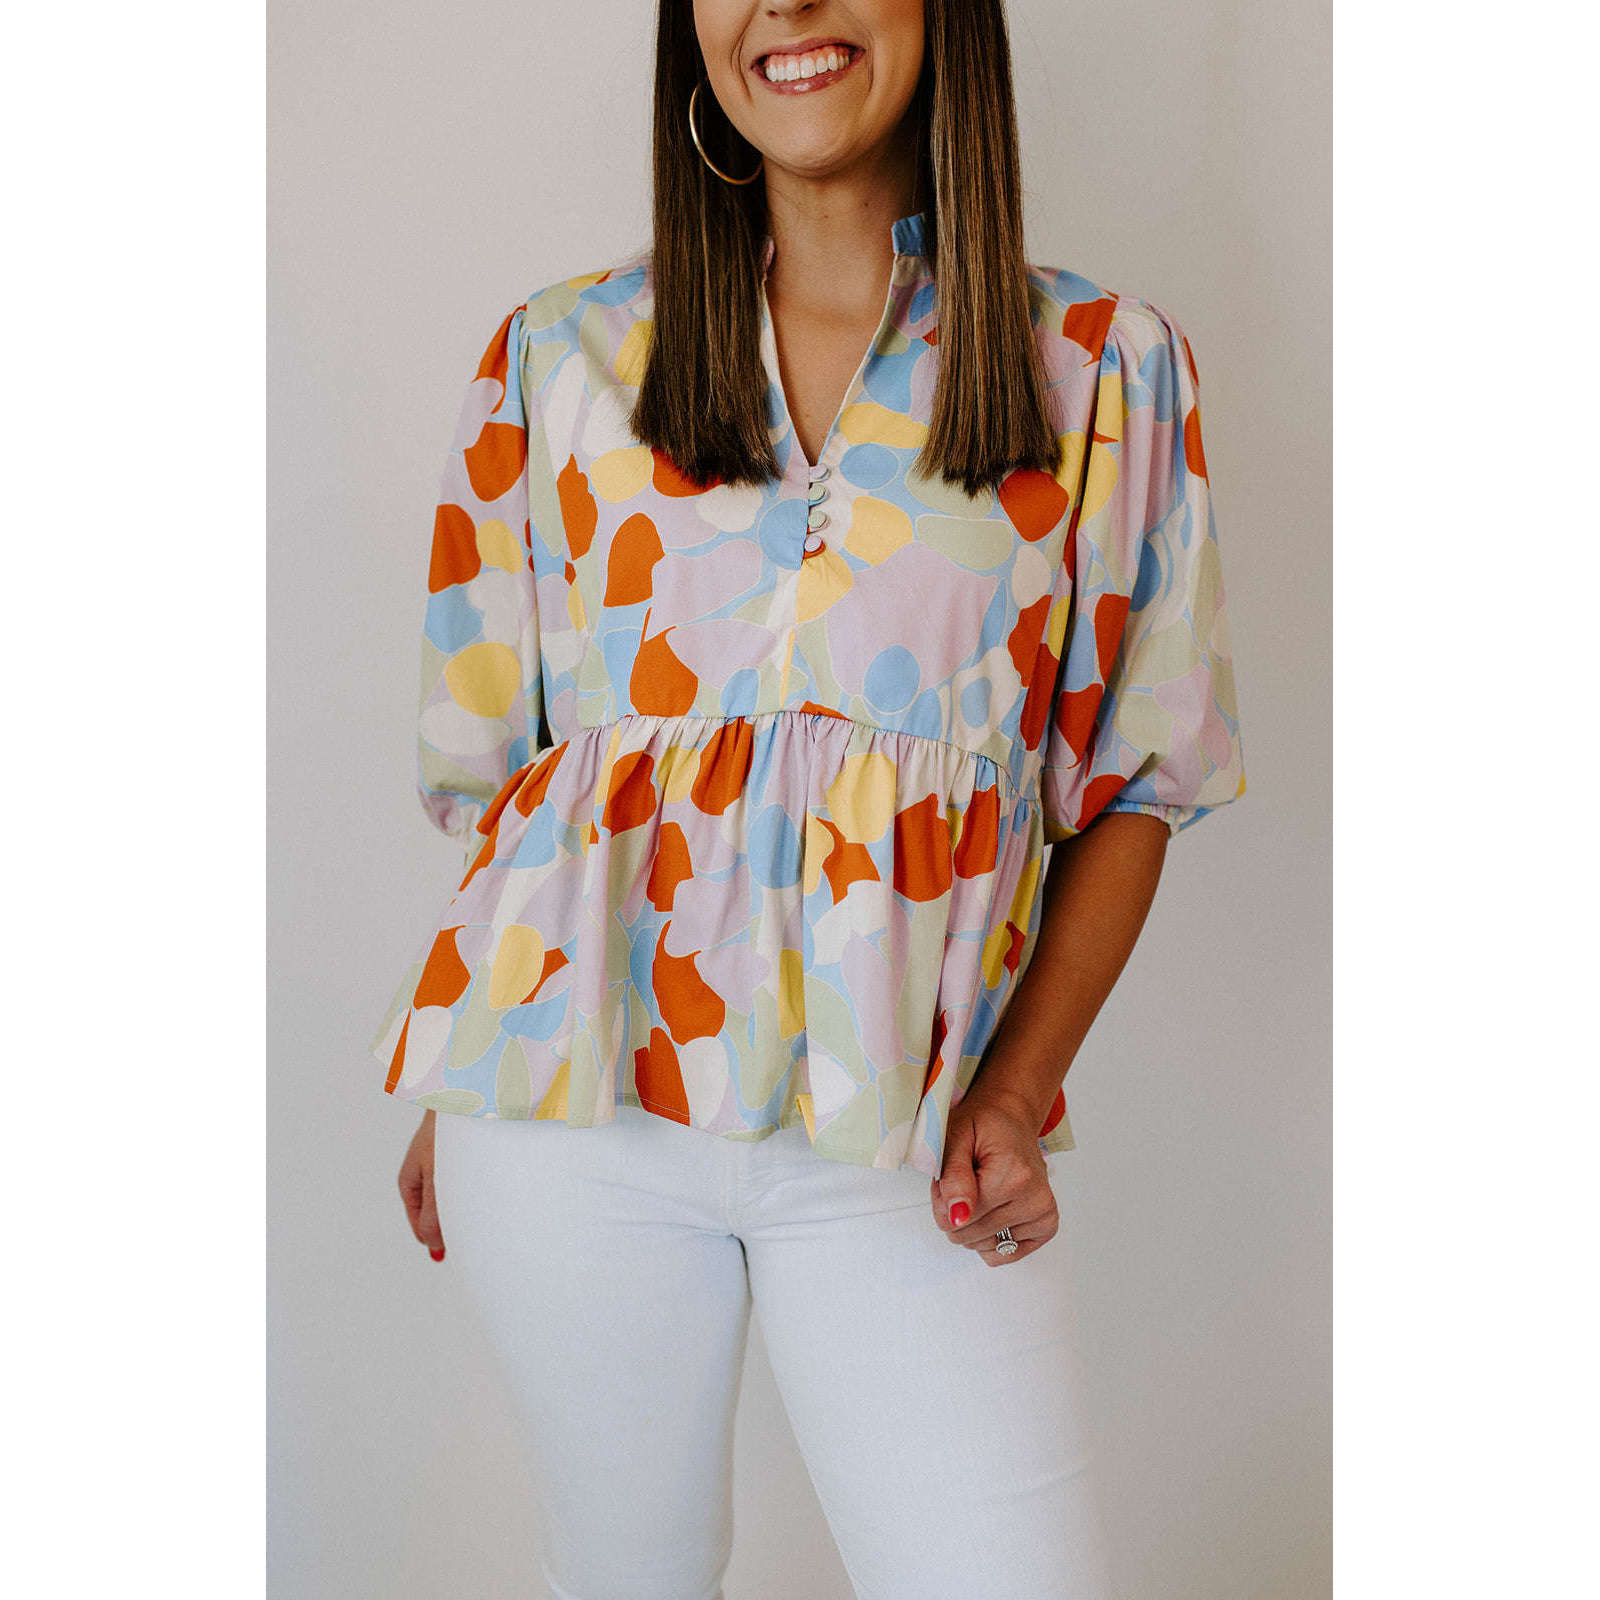 8.28 Boutique:Karlie Clothes,Karlie Mosaic Poplin Puff Sleeve Top,Shirts & Tops